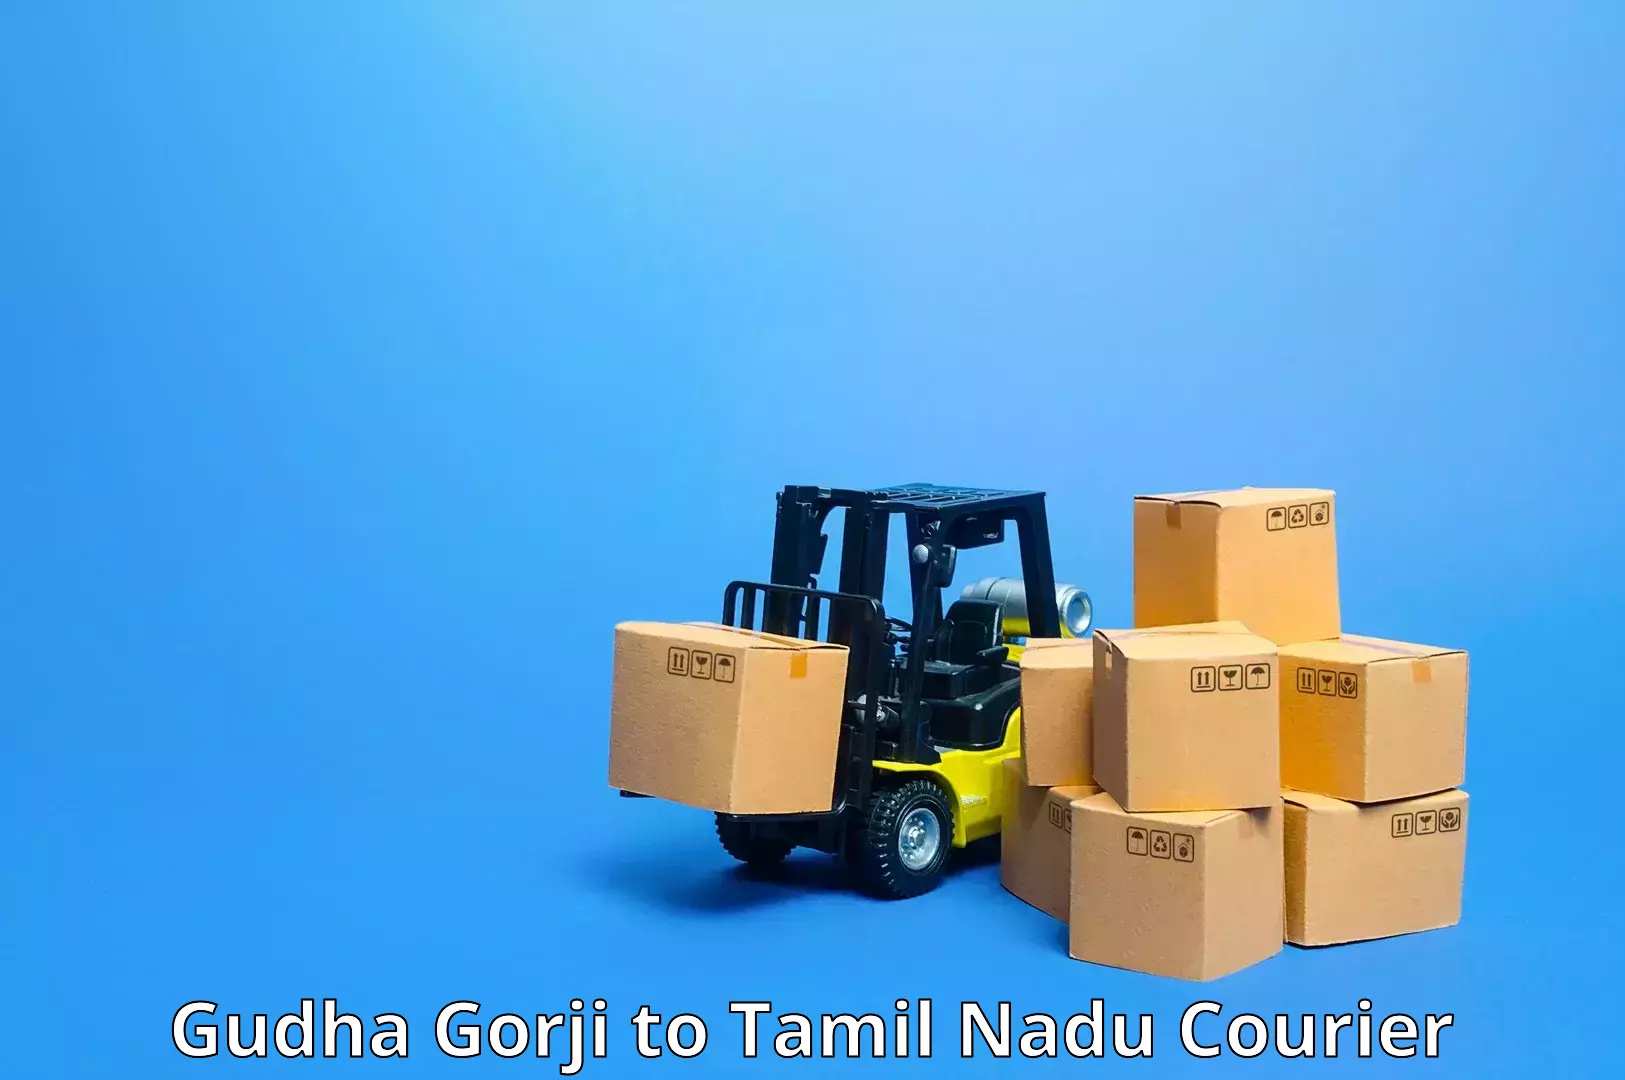 Global shipping networks Gudha Gorji to Tamil Nadu